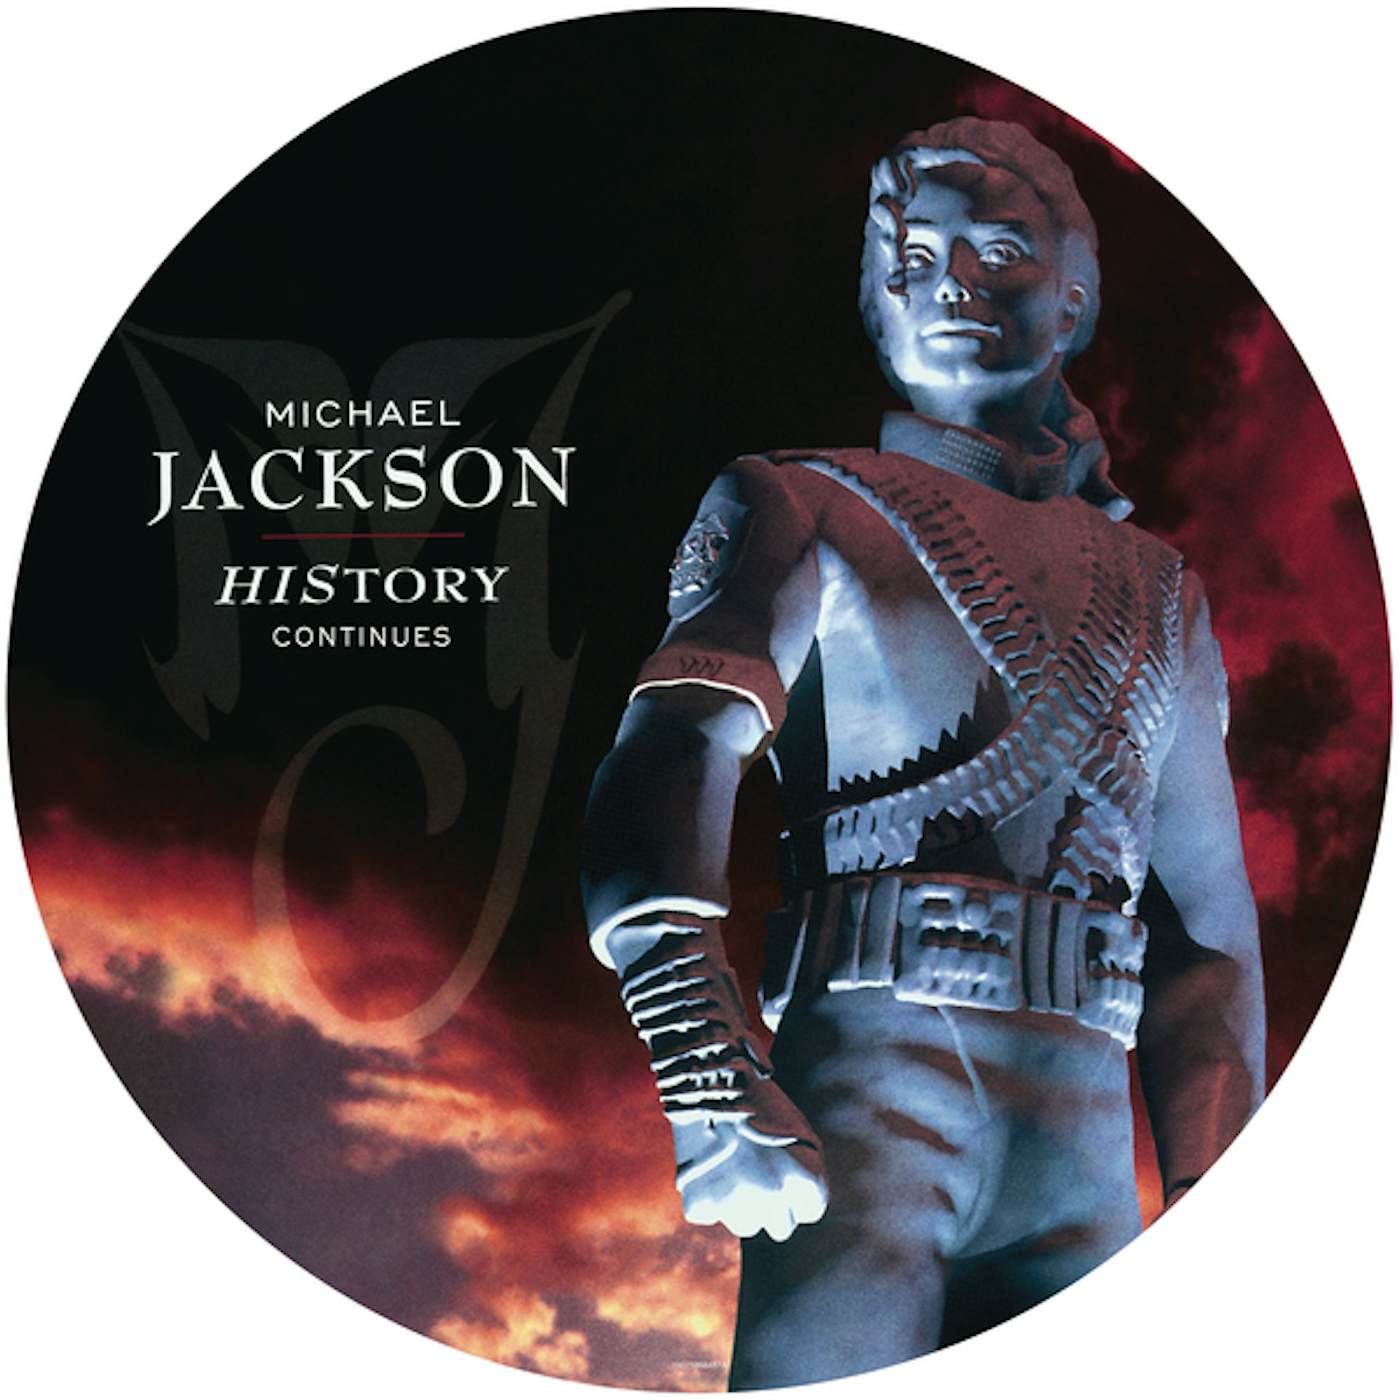 Michael Jackson Scream 180g 2LP (Glow In The Dark Vinyl)